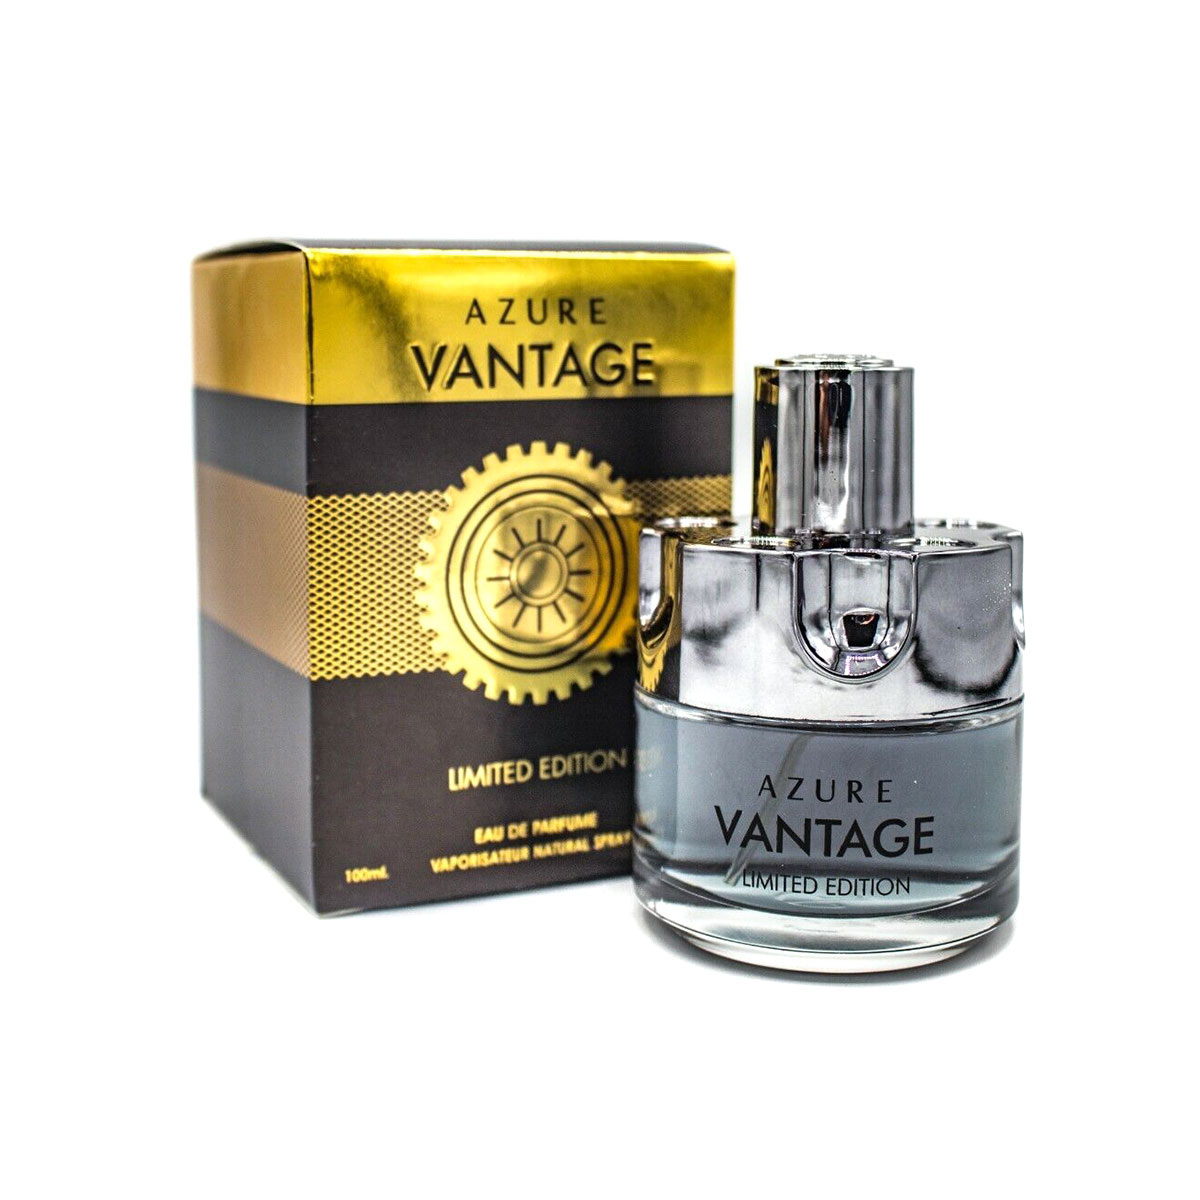 Azure Vantage Limited Edition